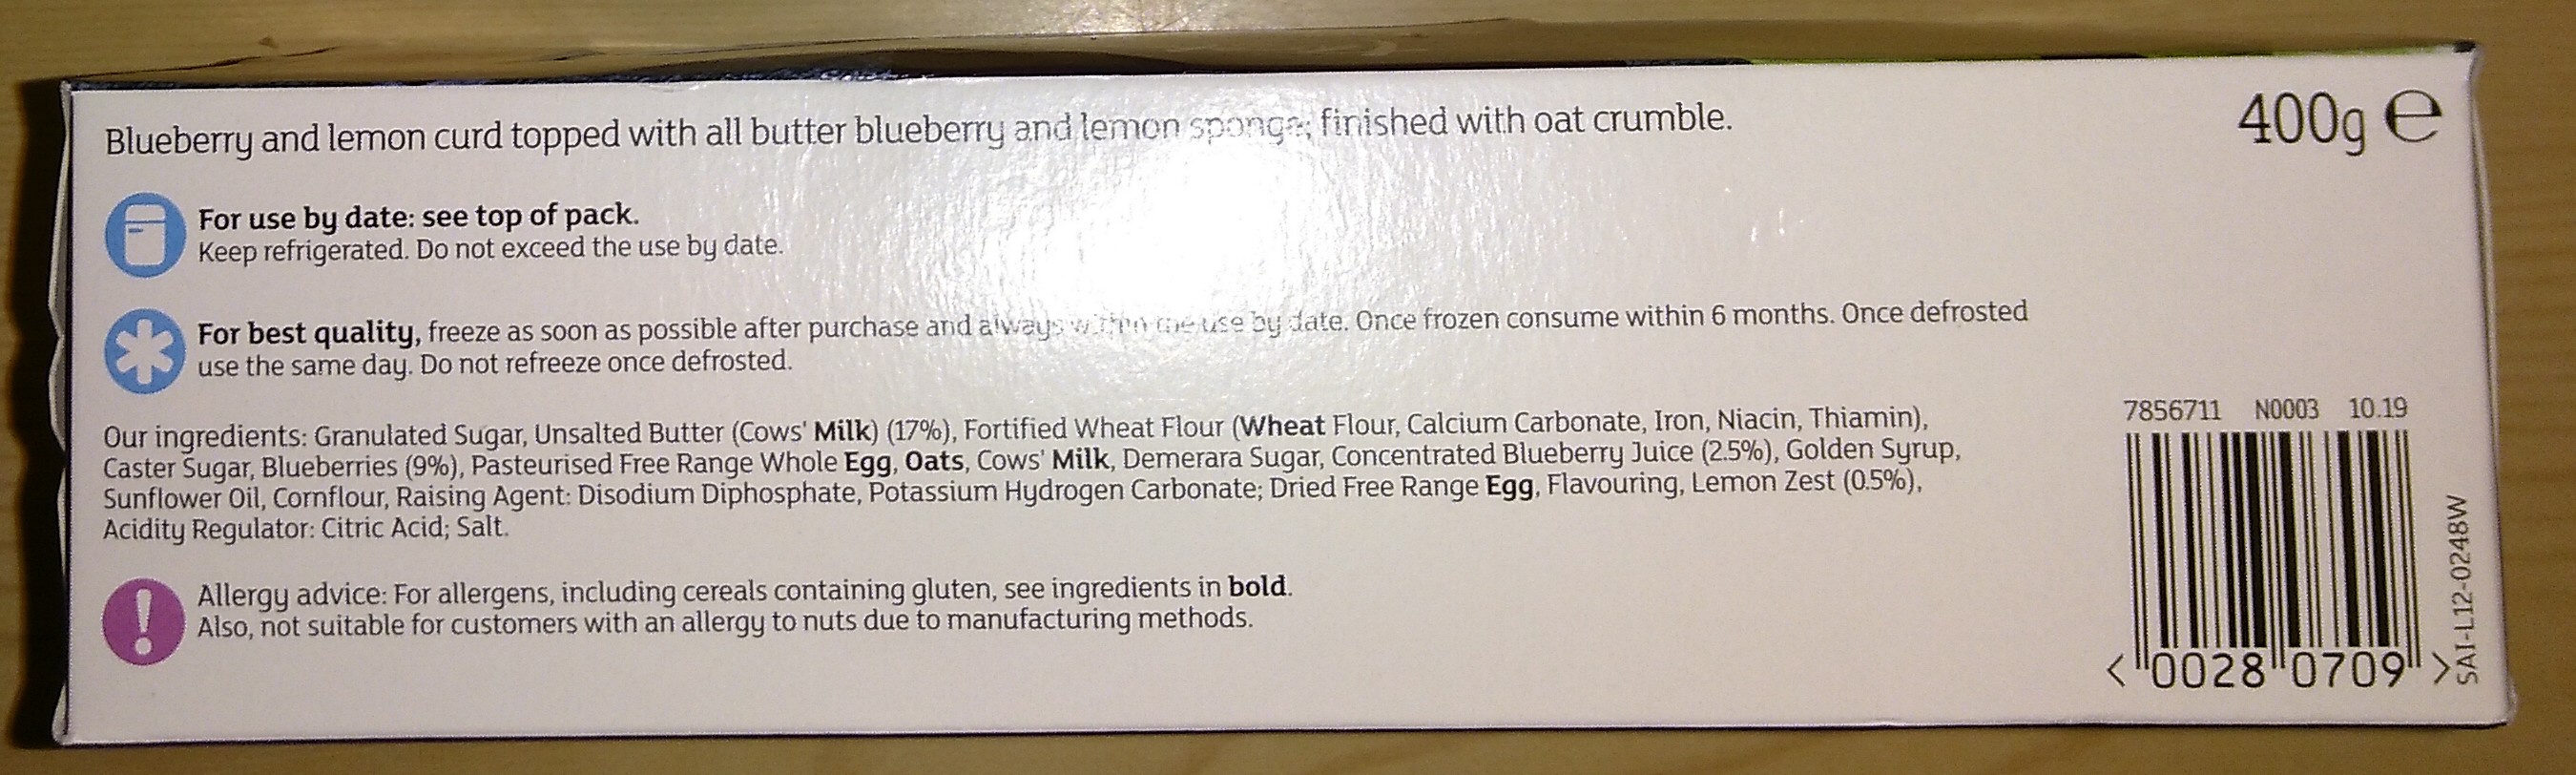 Blueberry and lemon sponge pudding - Ingredients